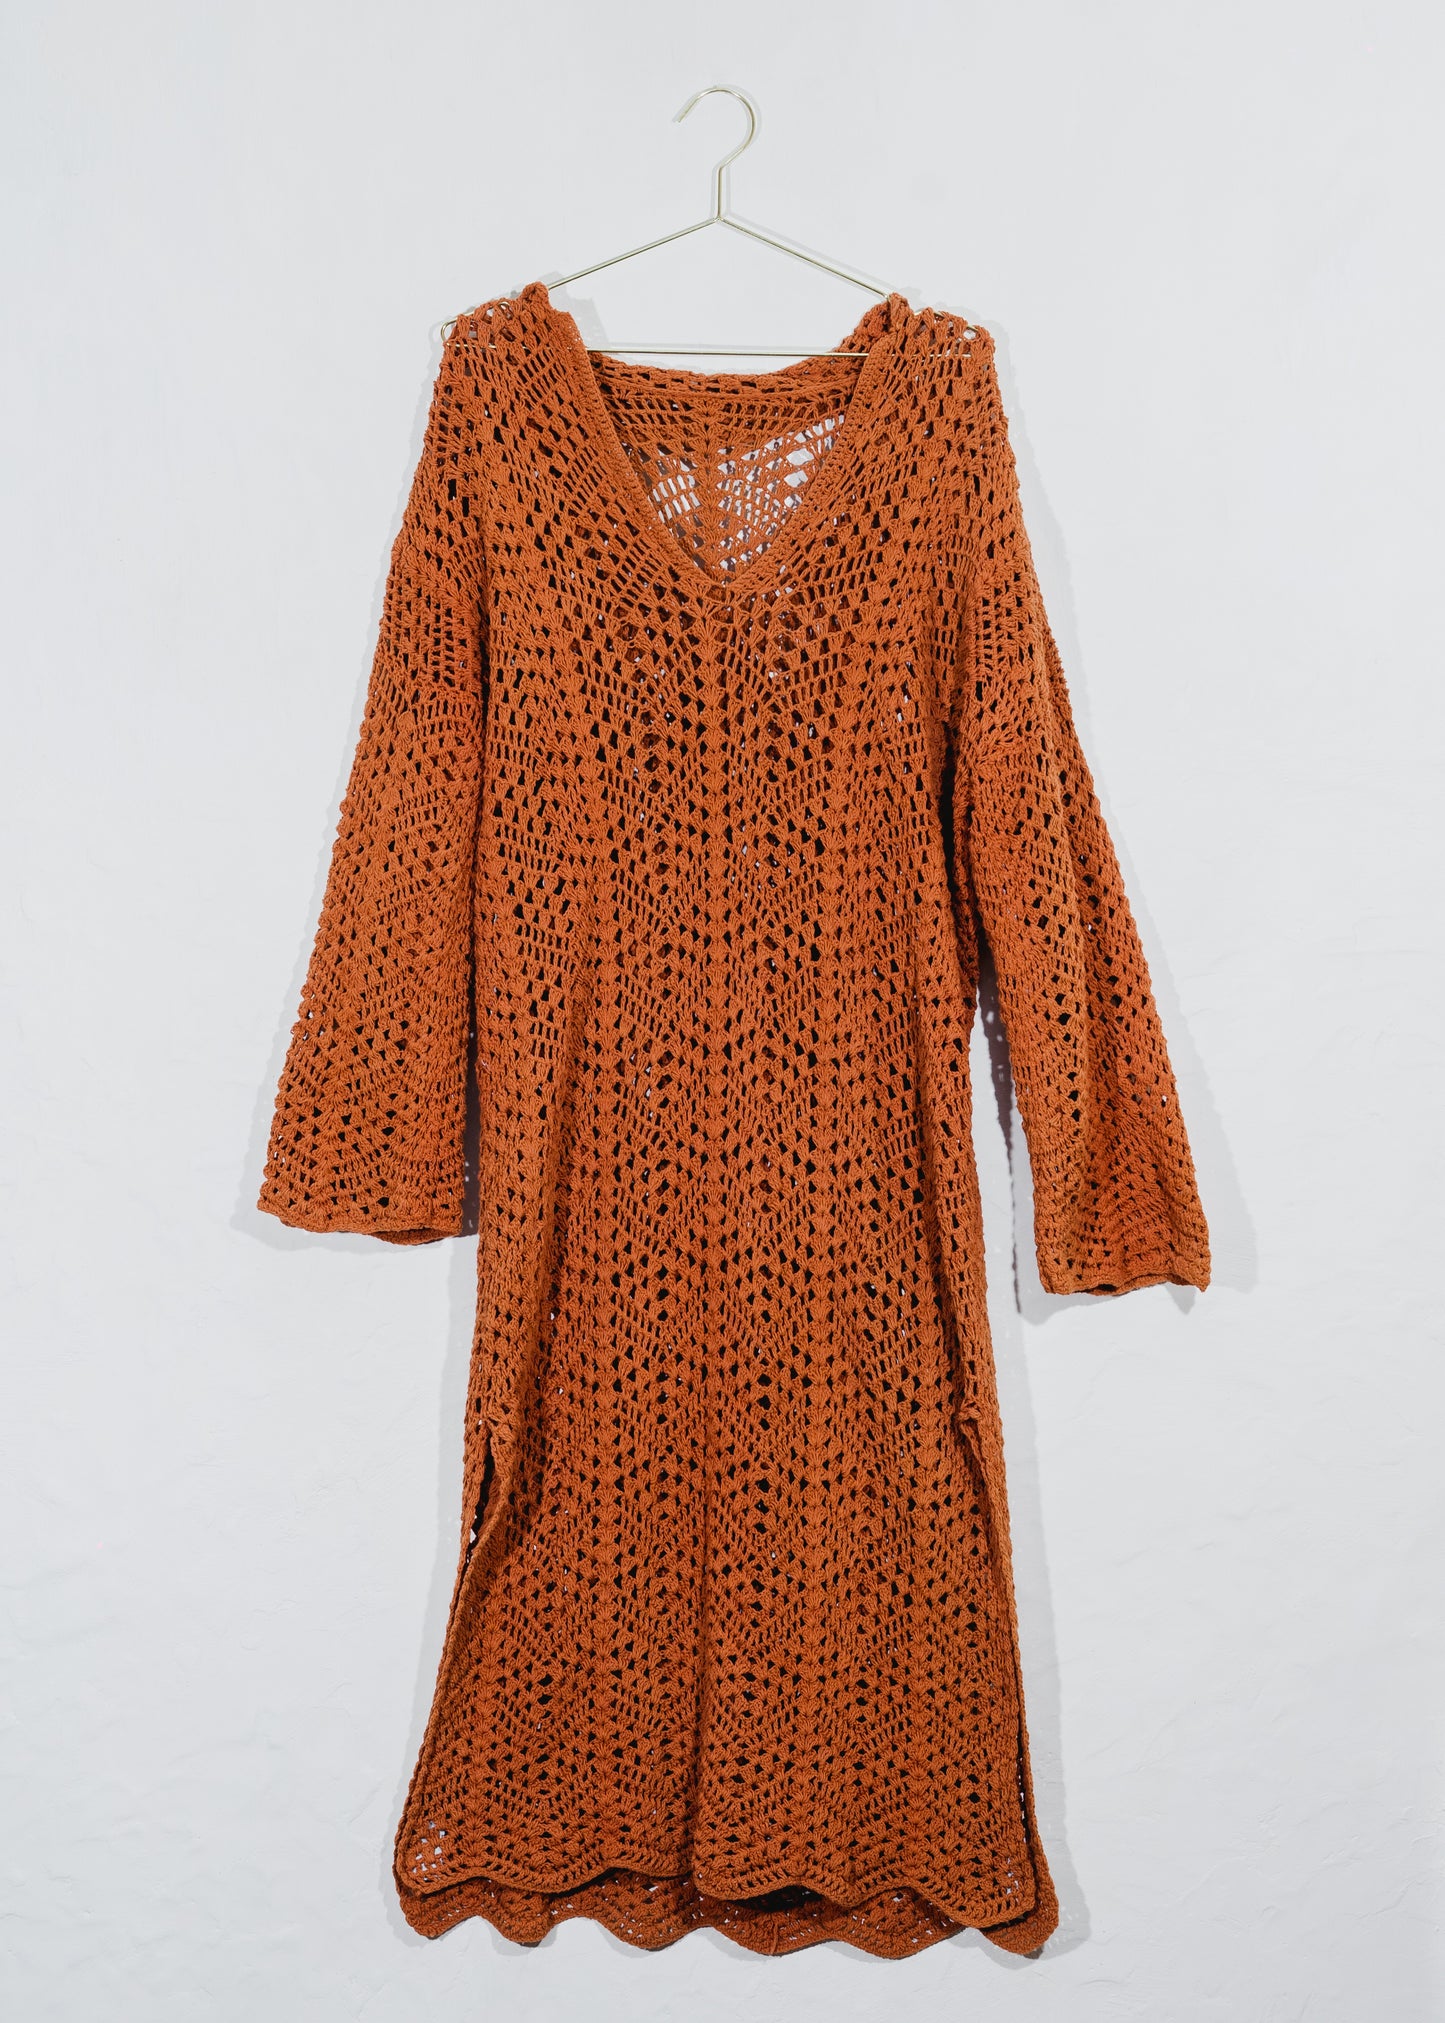 Hand Crochet Caftan in Cotton Rust Color